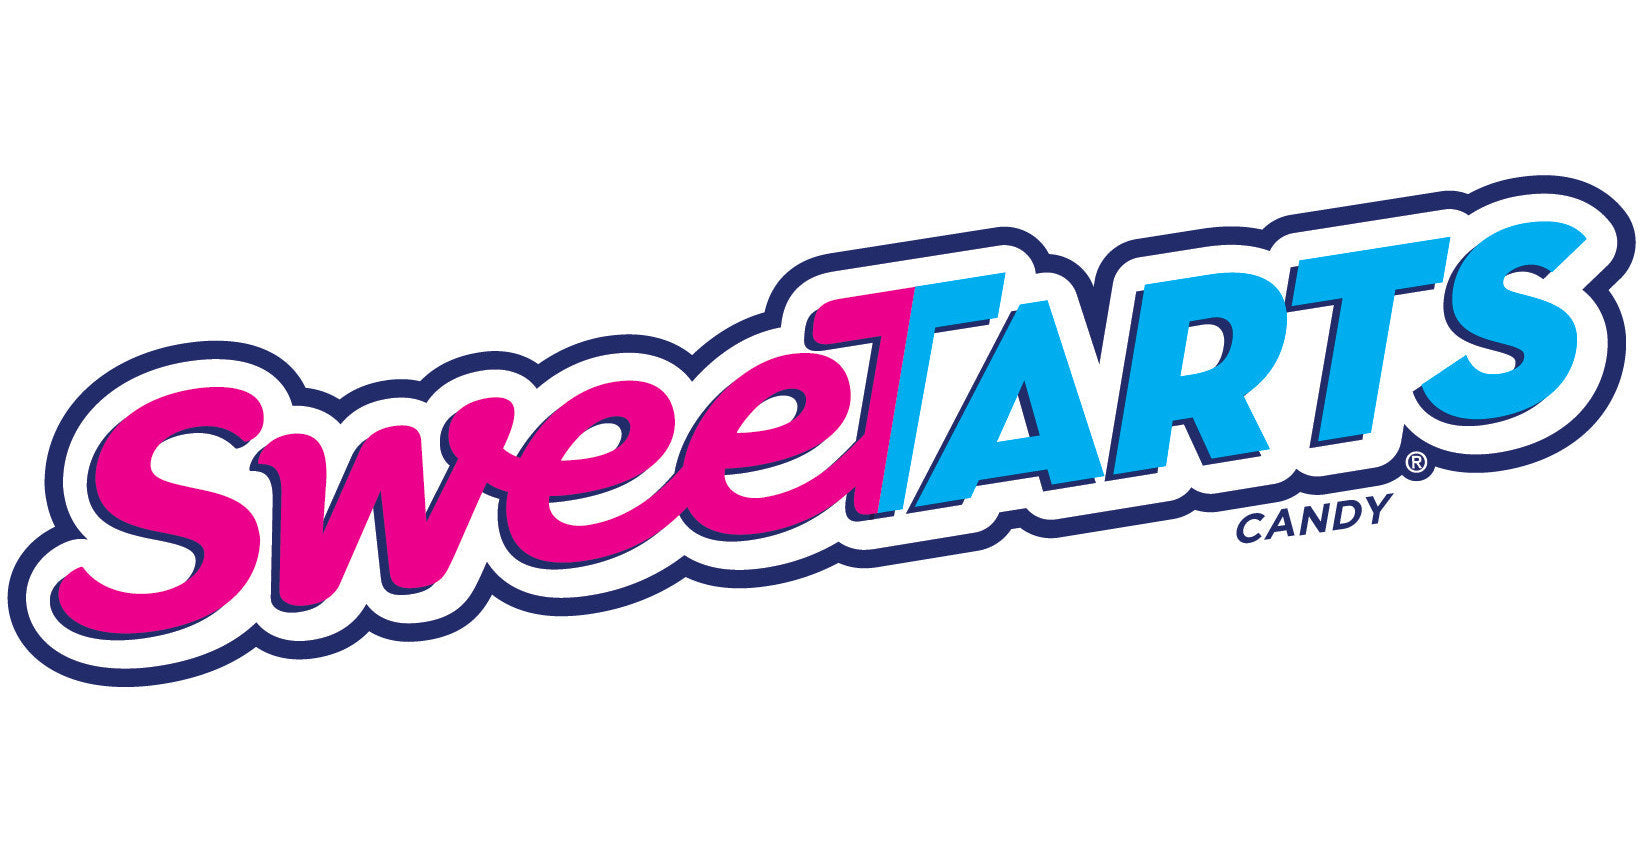 Sweetarts - My American Shop